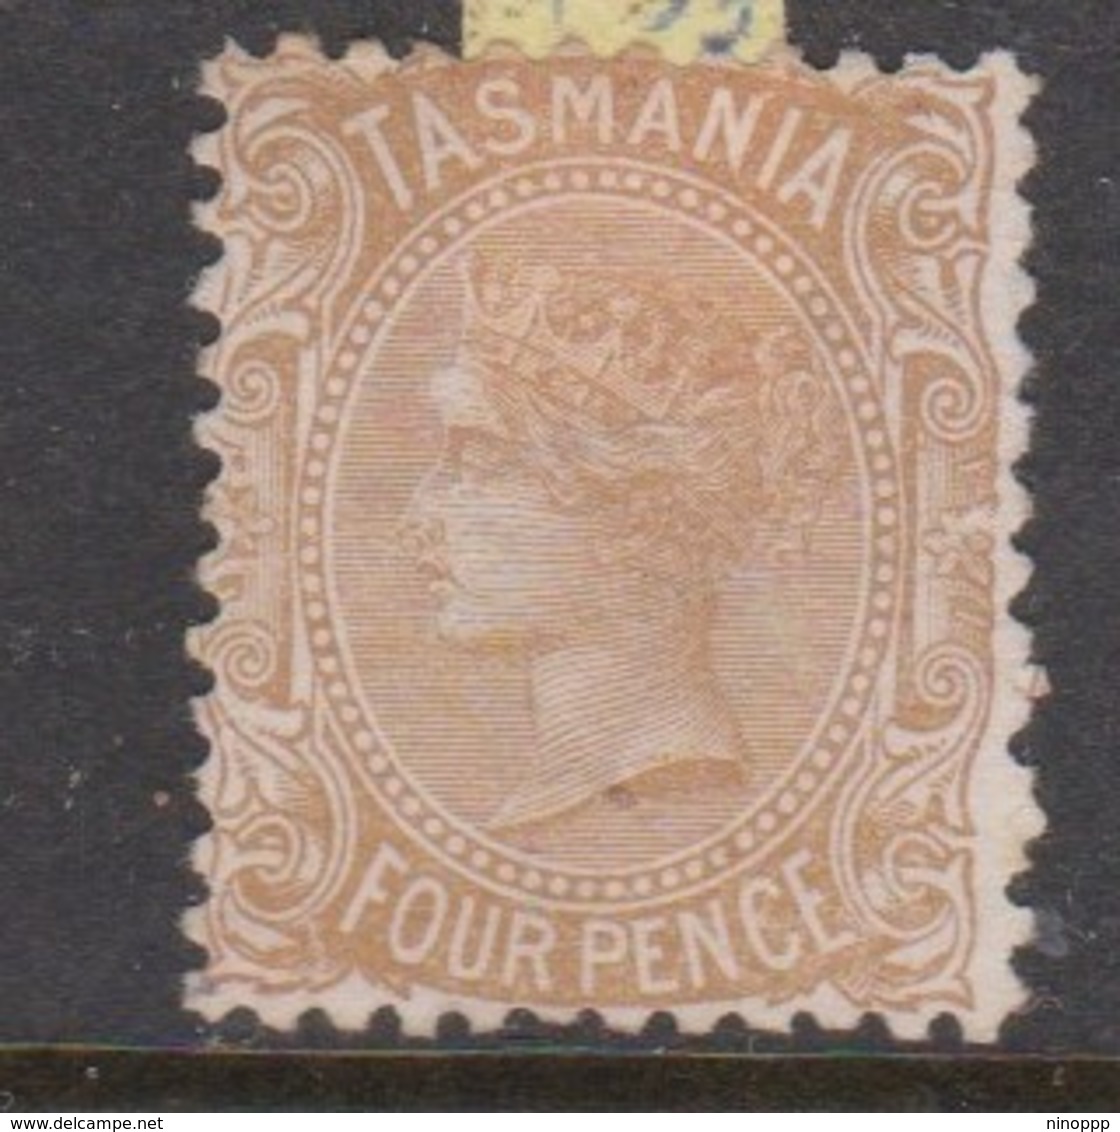 Australia-Tasmania SG 166a 1880 4d Chrome Yellow,mint Hinged,perf 12 - Mint Stamps